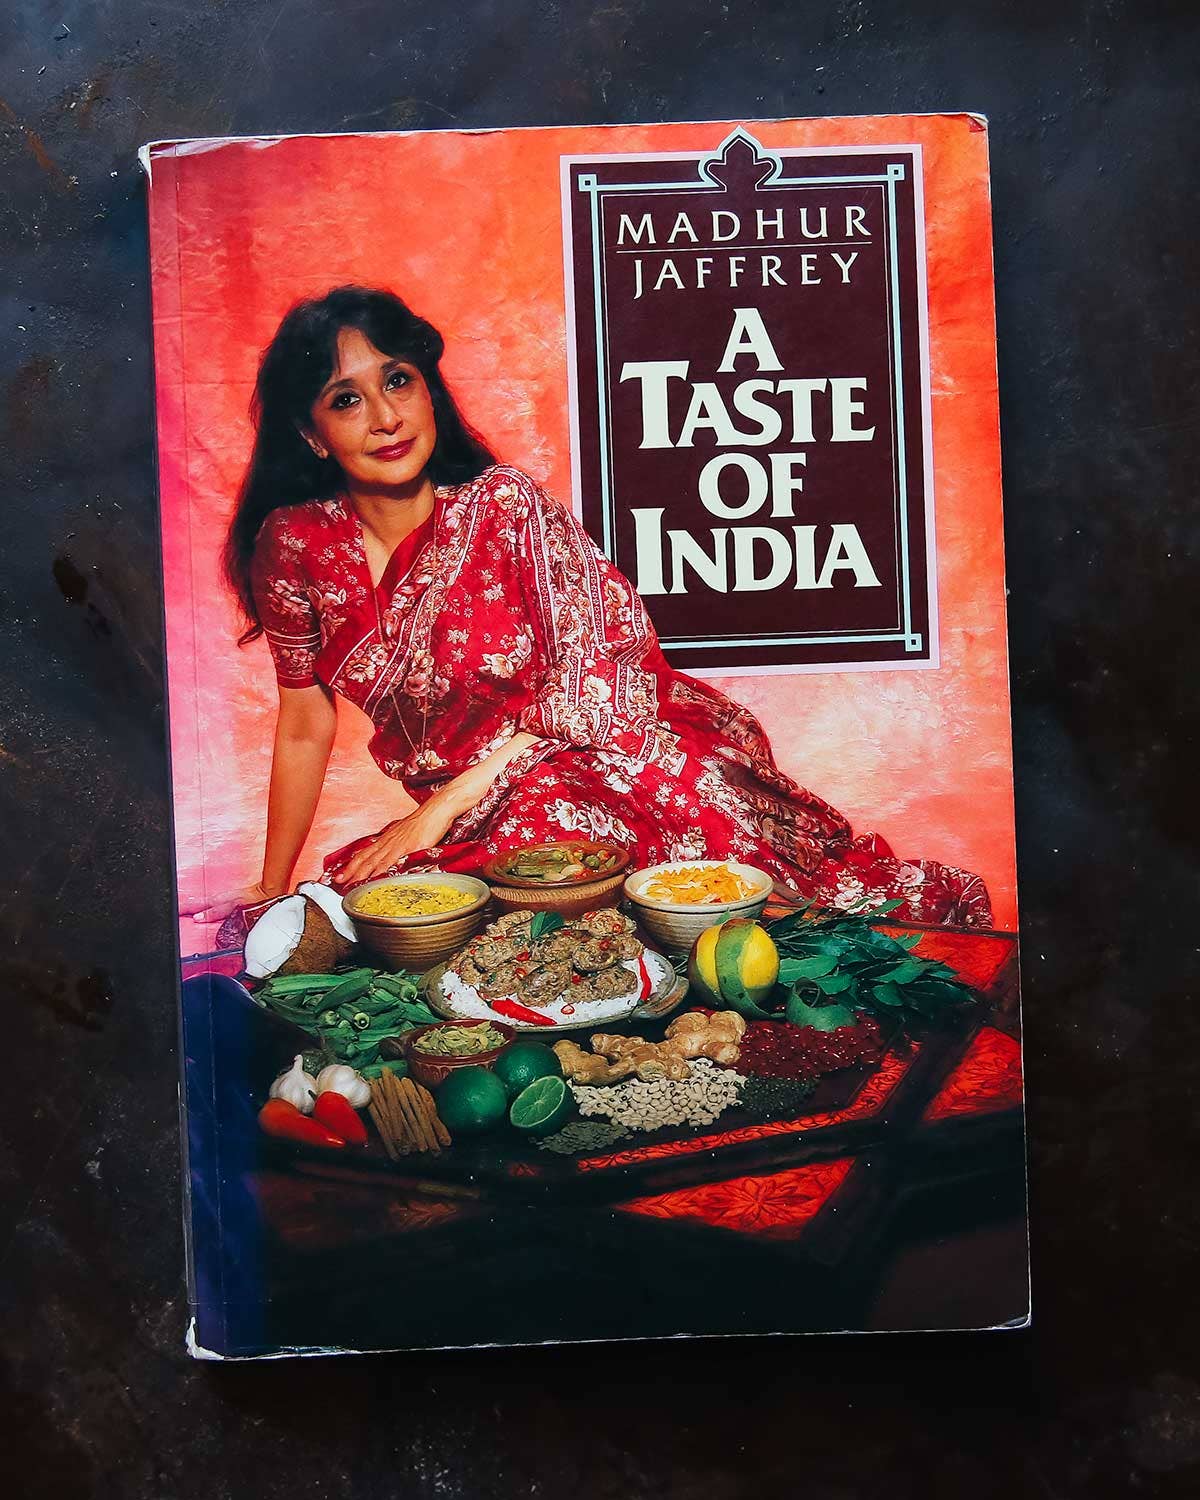 Madhur Jaffrey’s ‘A Taste of India’ is an Essential Indian Cookbook